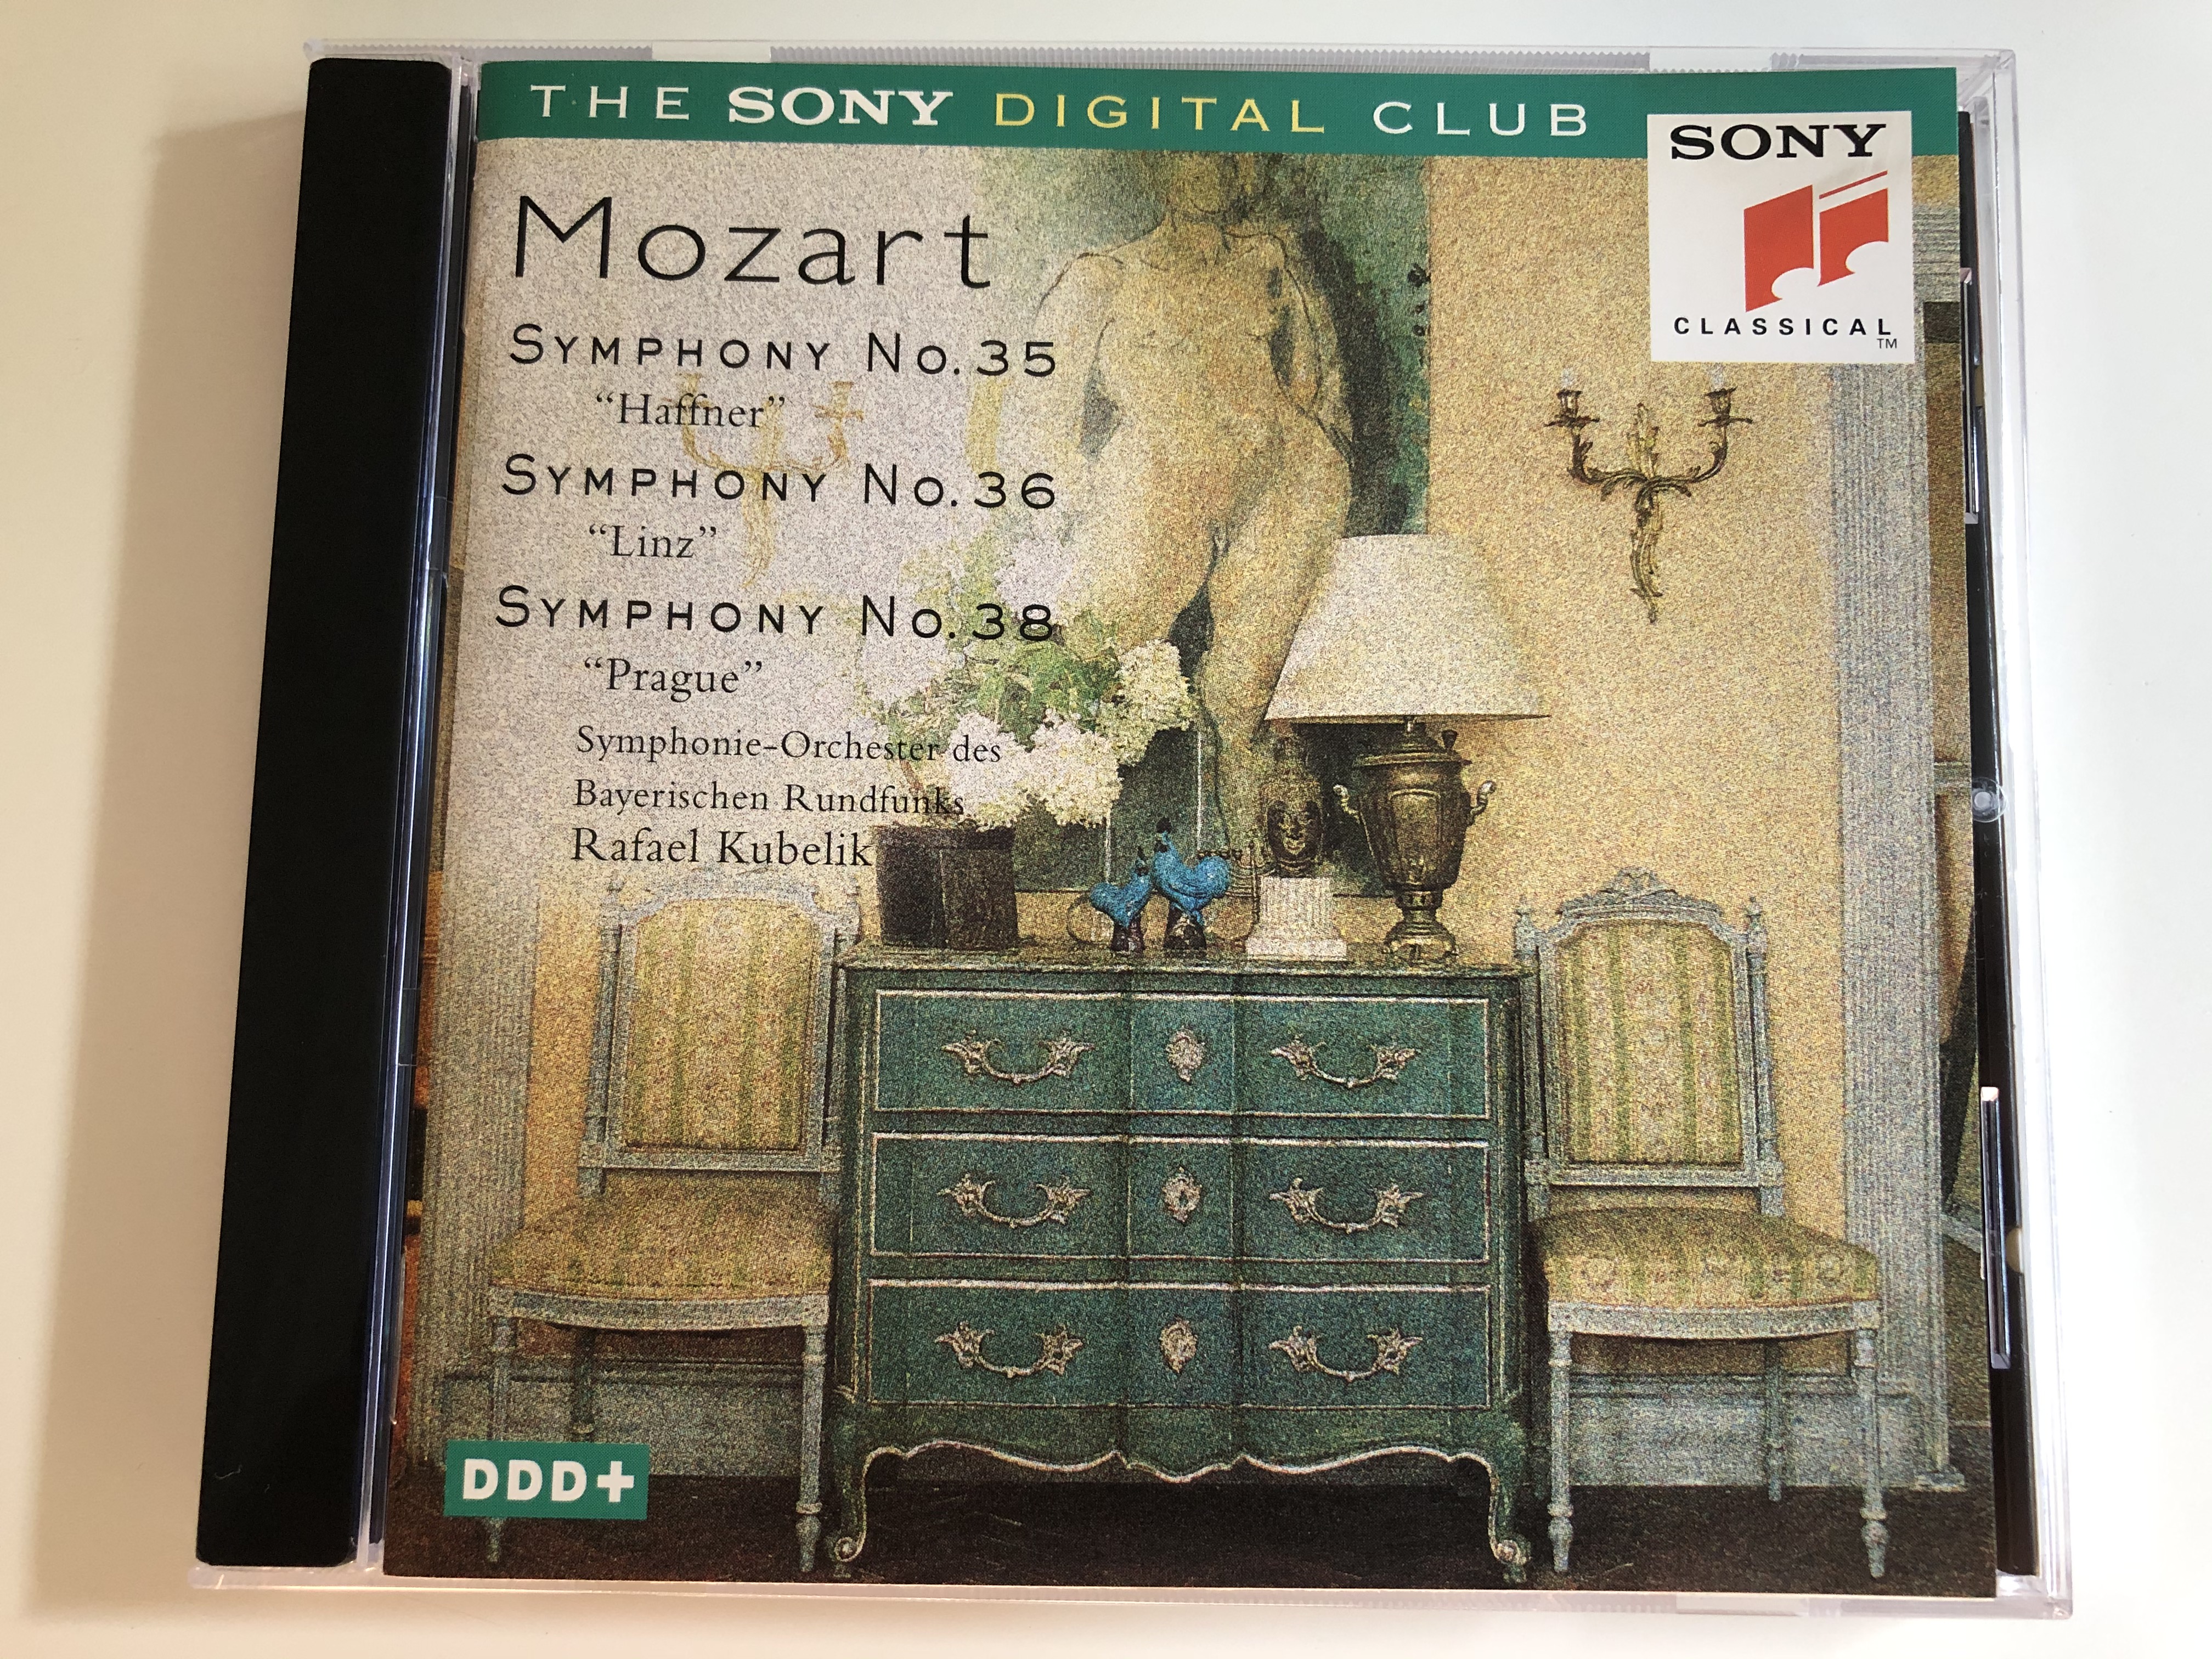 mozart-symphony-no.-35-haffner-symphony-no.-36-linz-symphony-no.-38-prague-symphonie-orchester-des-bayerischen-rundfunks-rafael-kubelik-sony-music-audio-cd-1982-smk-66932-2-.jpg